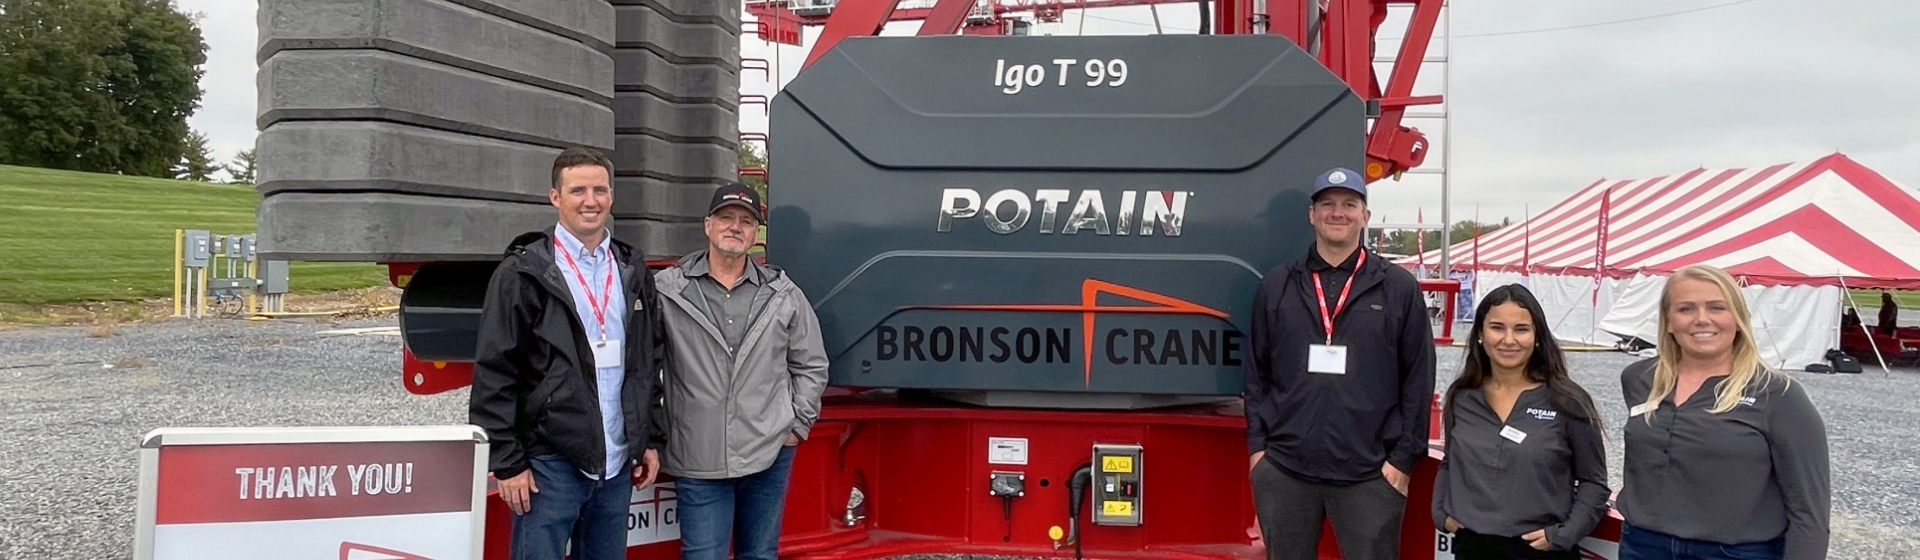 The-first-Potain-Igo-T-99-self-erecting-crane-in-North-America-goes-to-Bronson-Crane.jpg